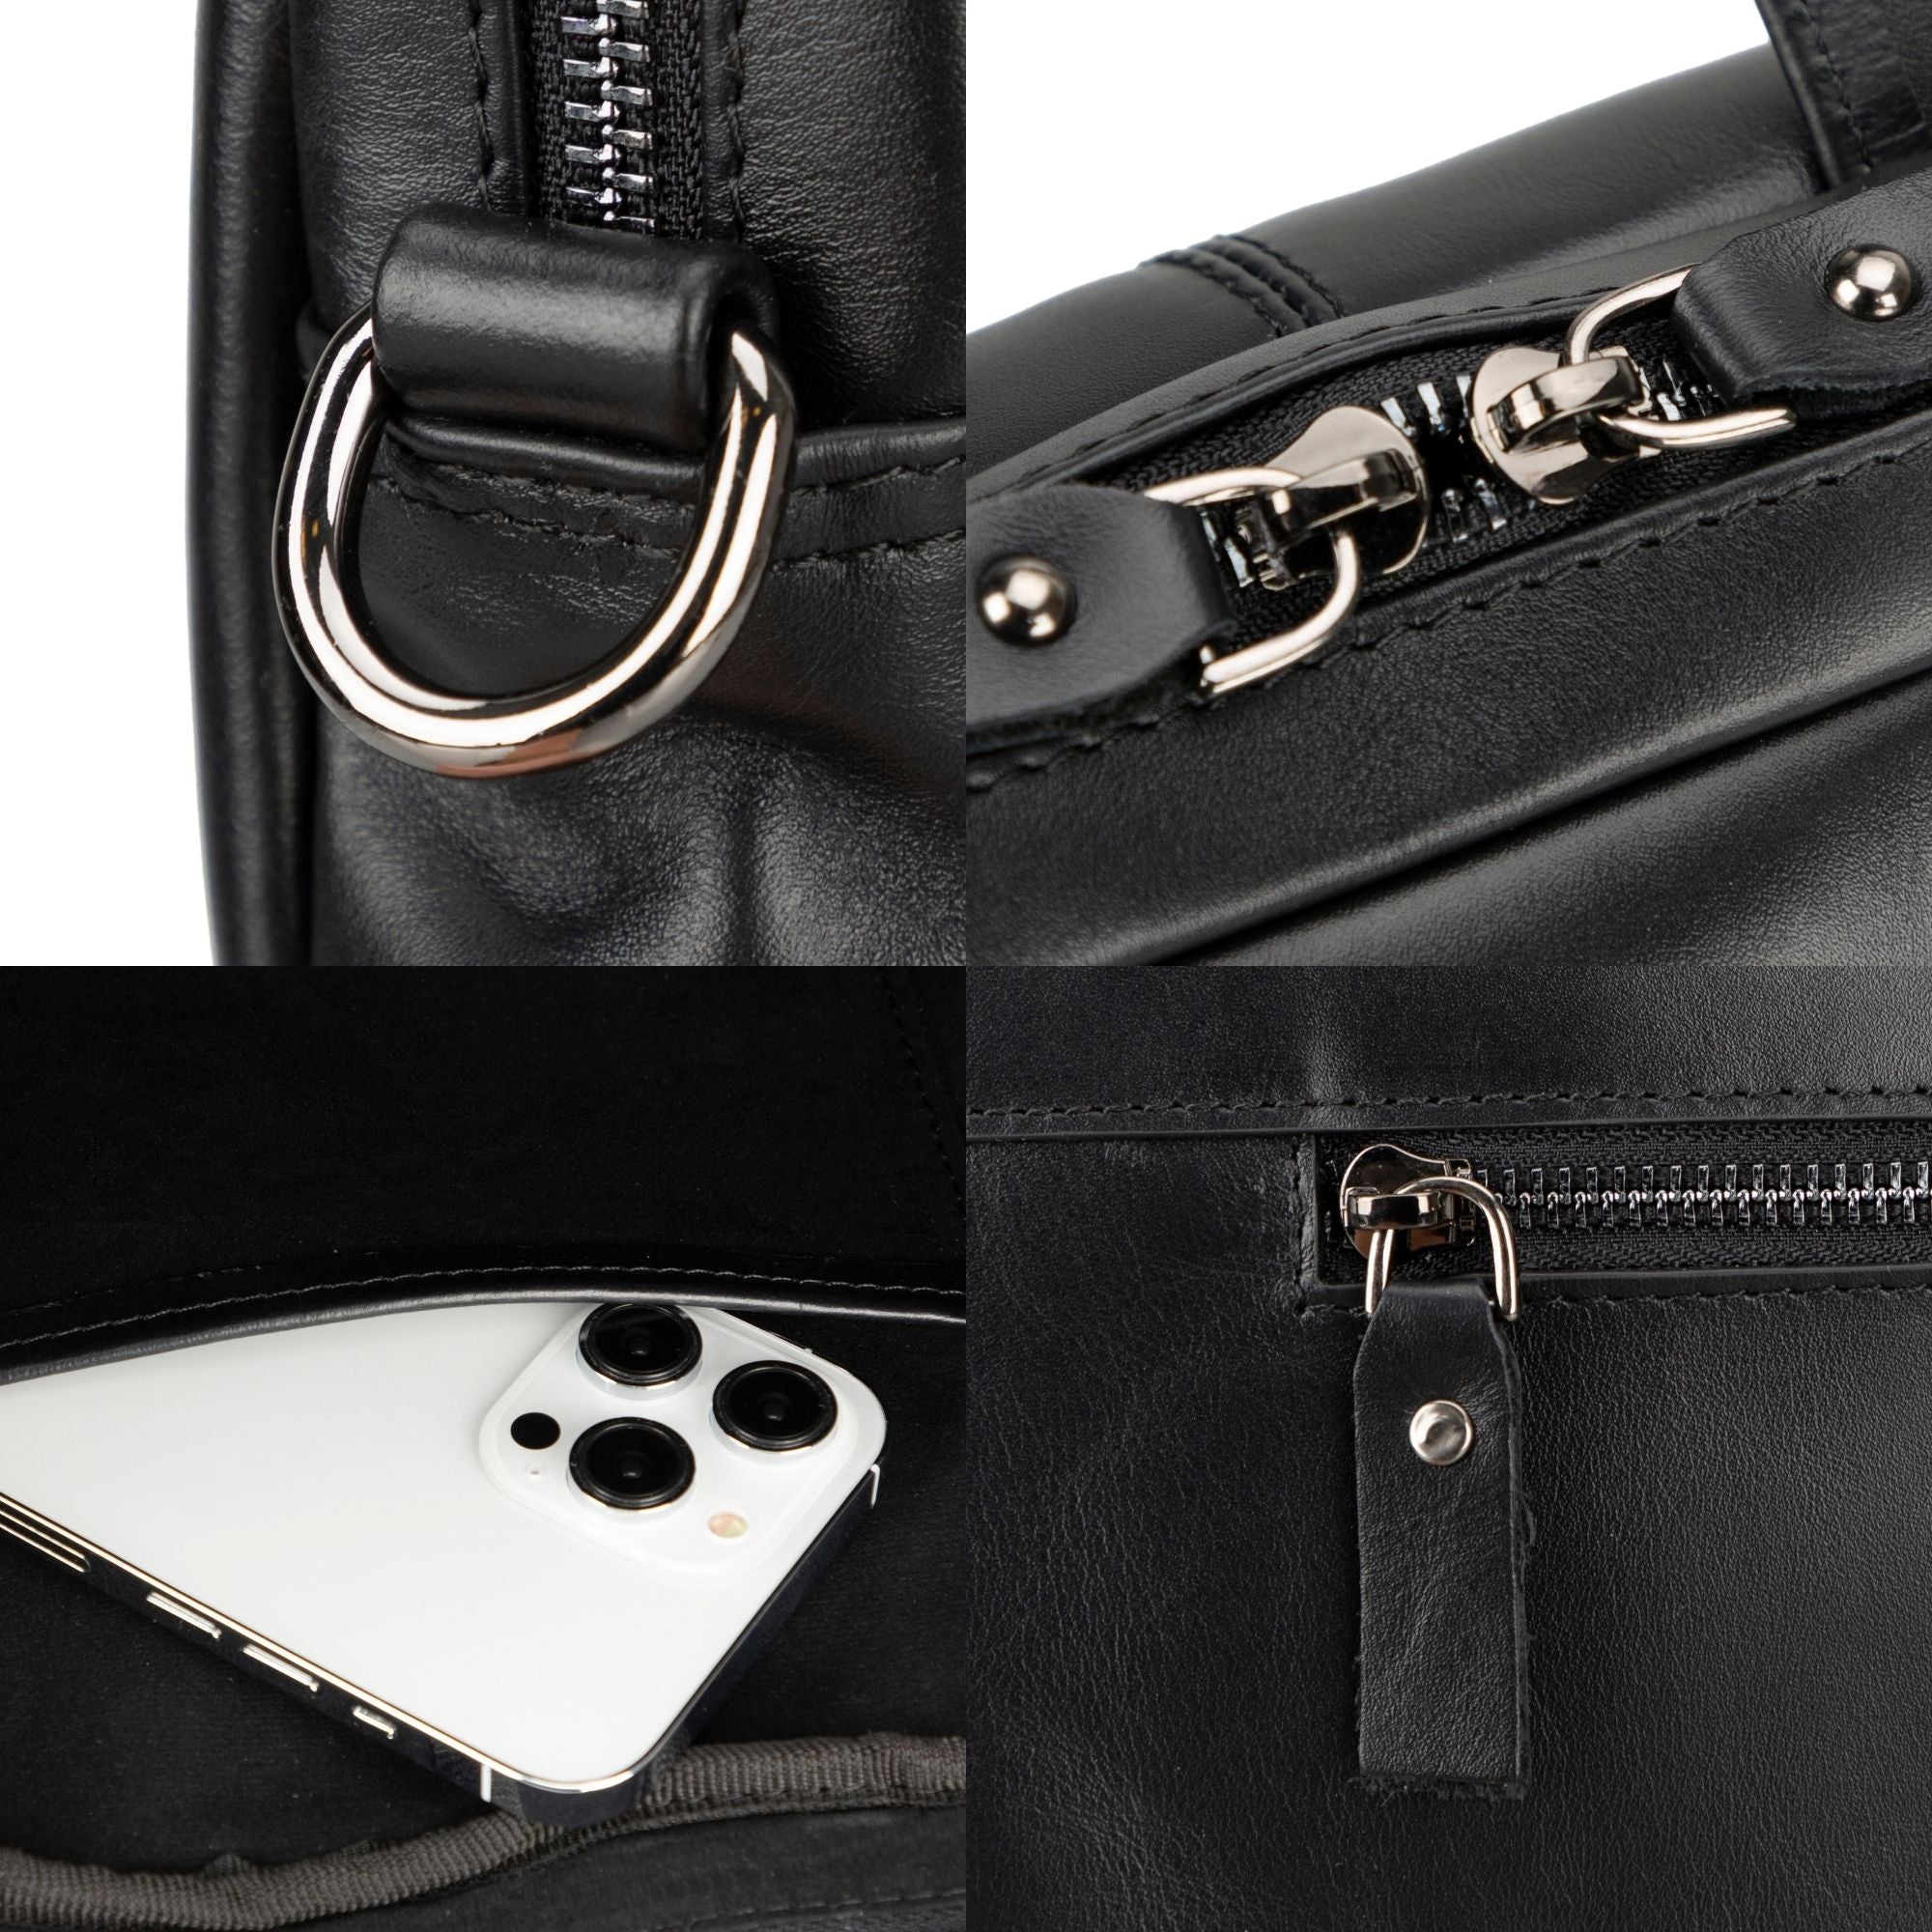 Afton MacBook Leather Sleeve and Bag - 14 Inches - Black - TORONATA